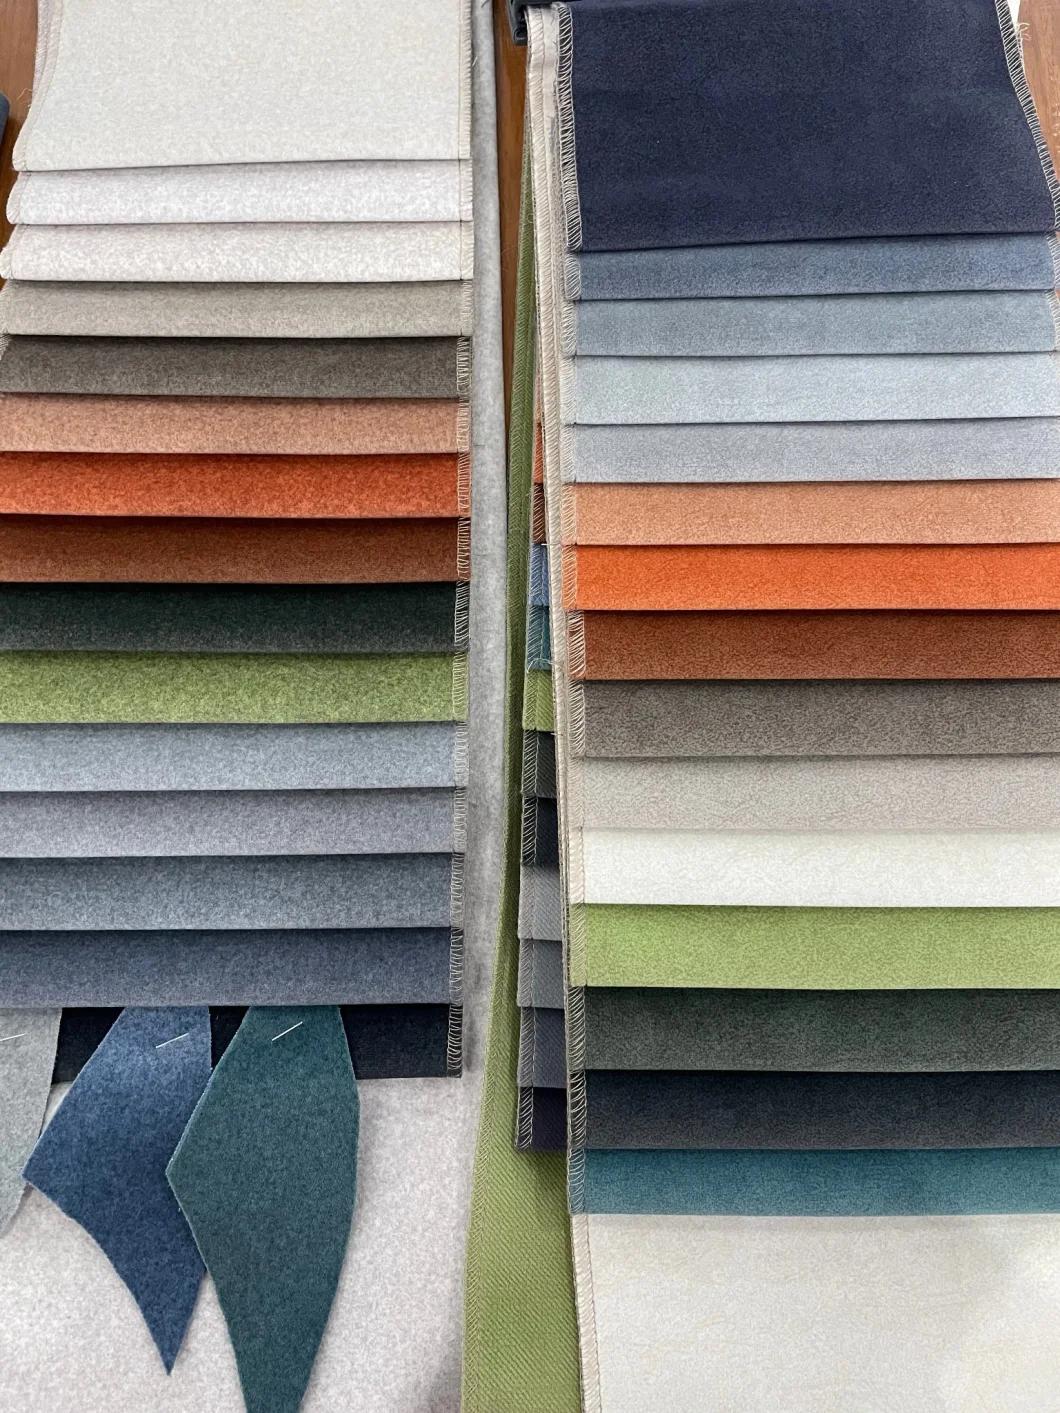 100%Polyester Linen Fabric Sofa Fabric Ready Goods (S2038)